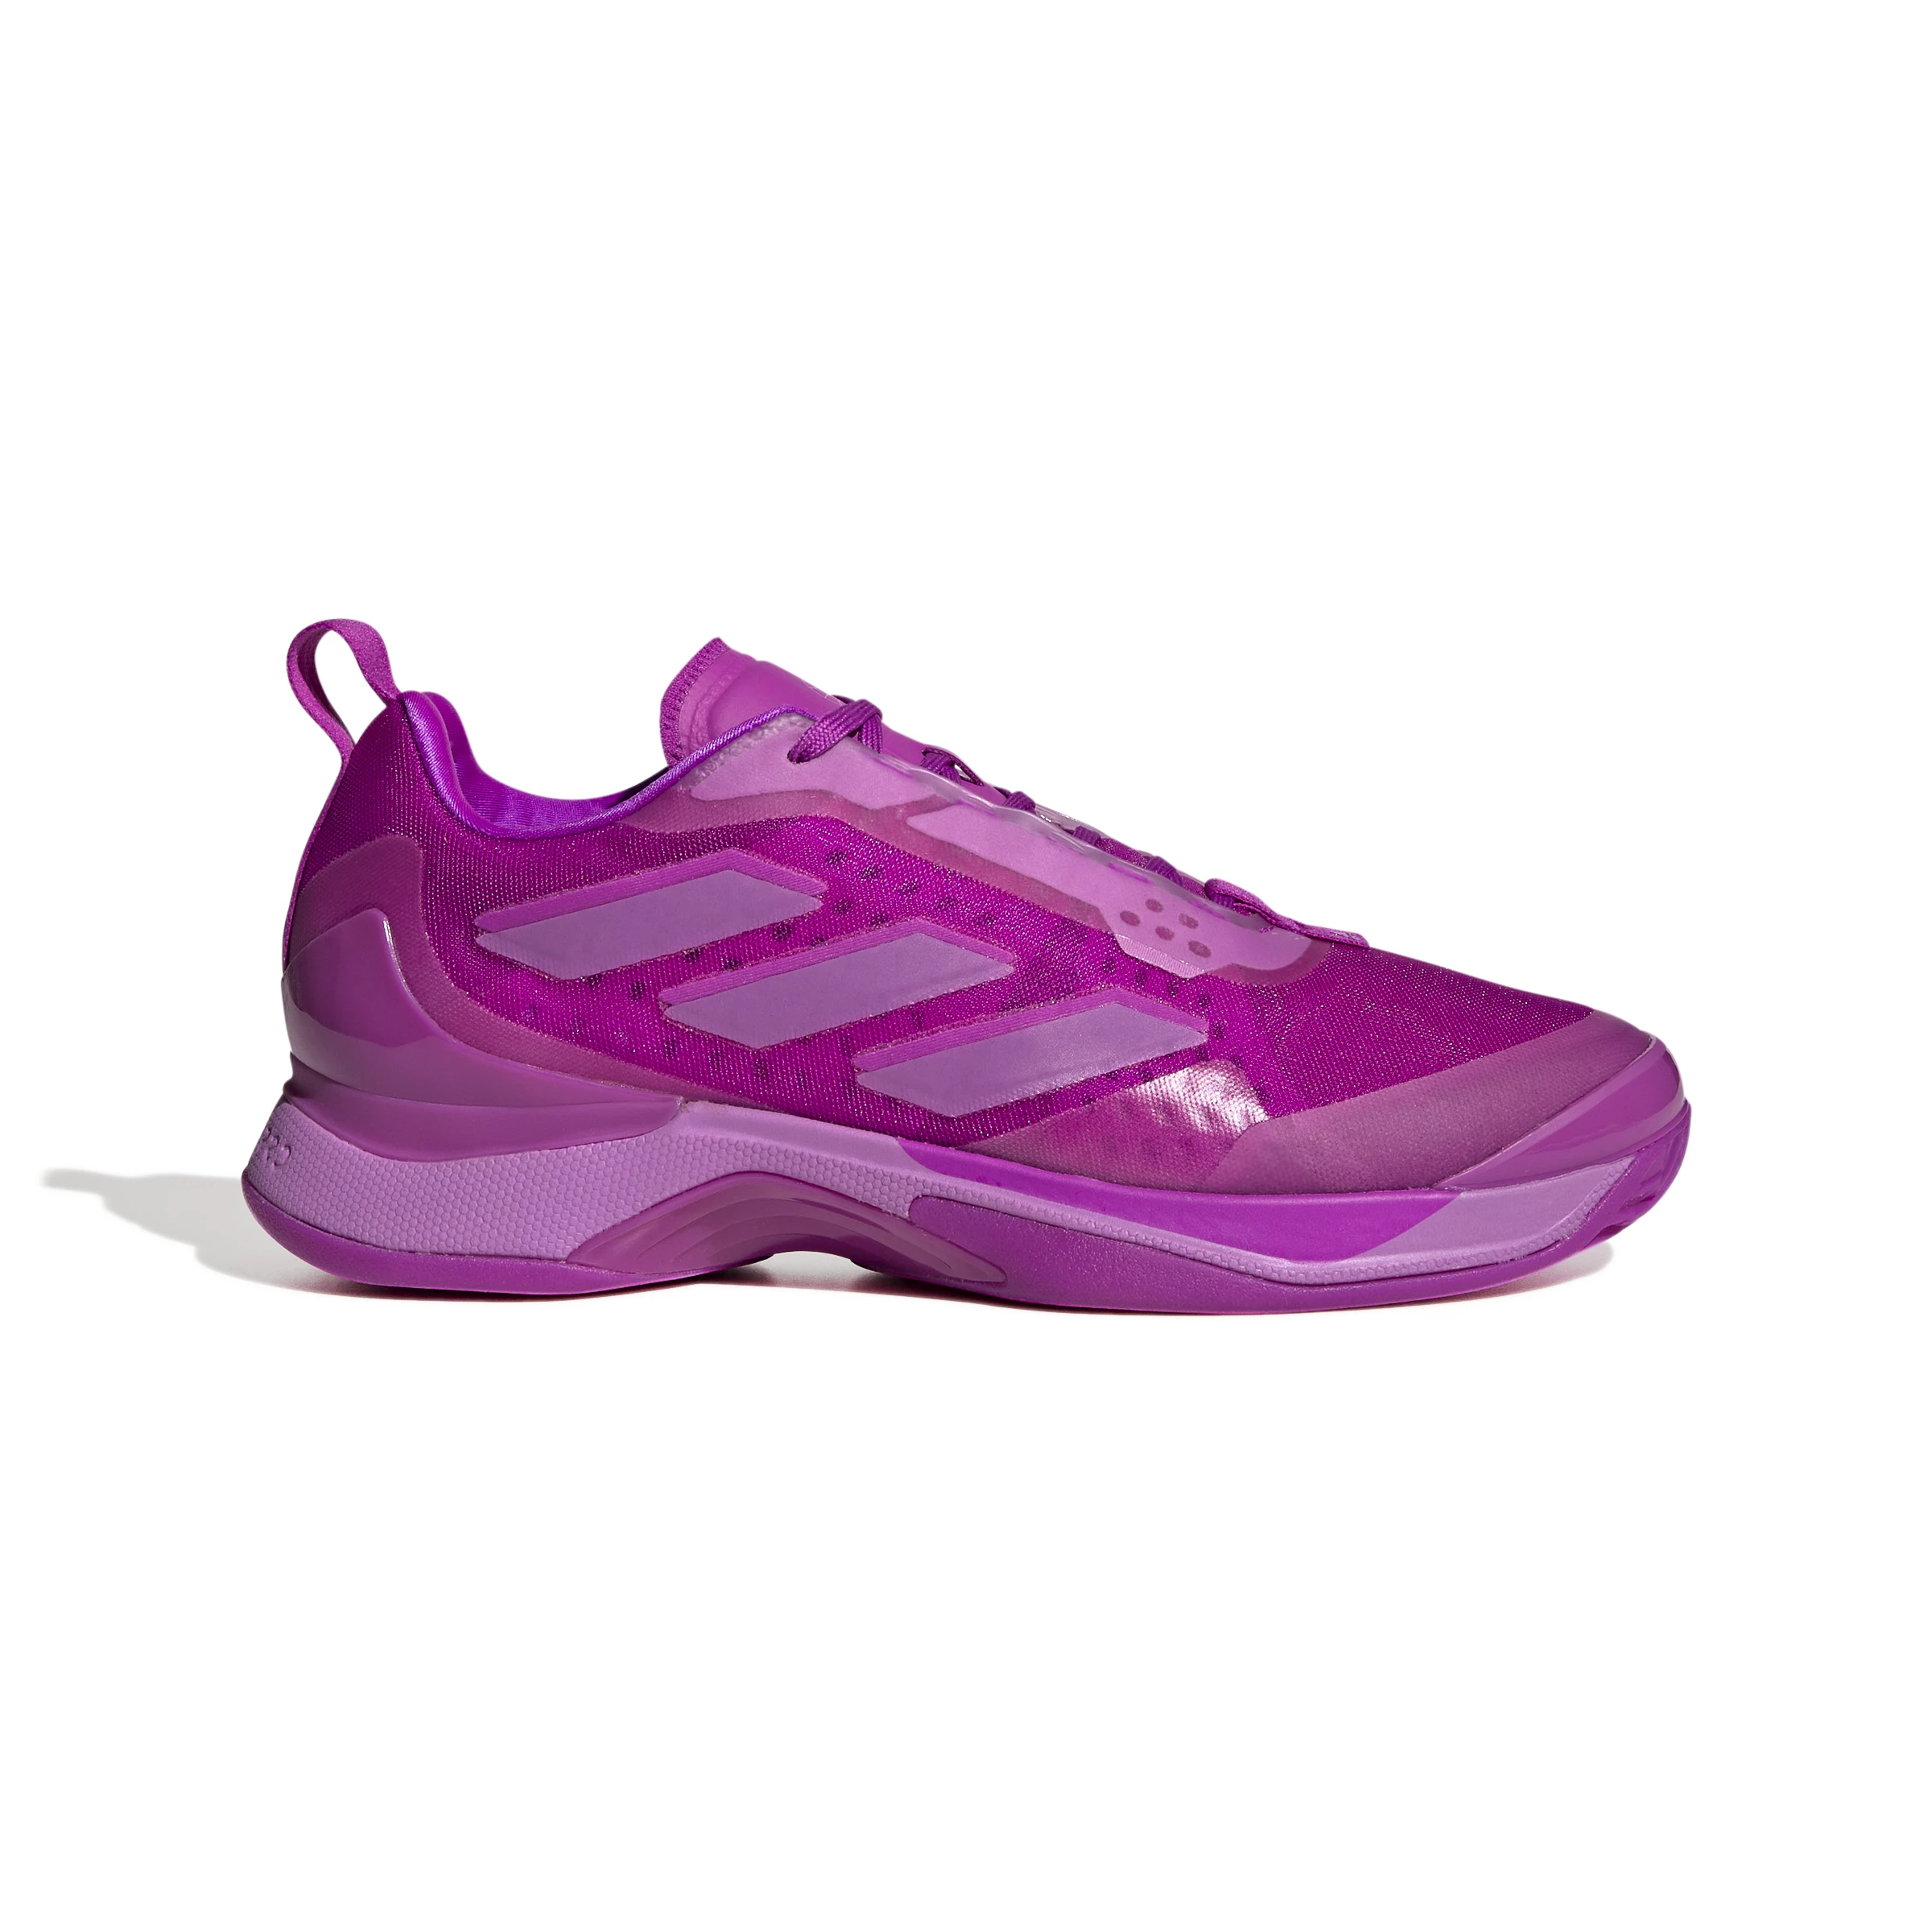 adidas Avacourt Purple Women's Tennis Shoes EUR 40 2/3